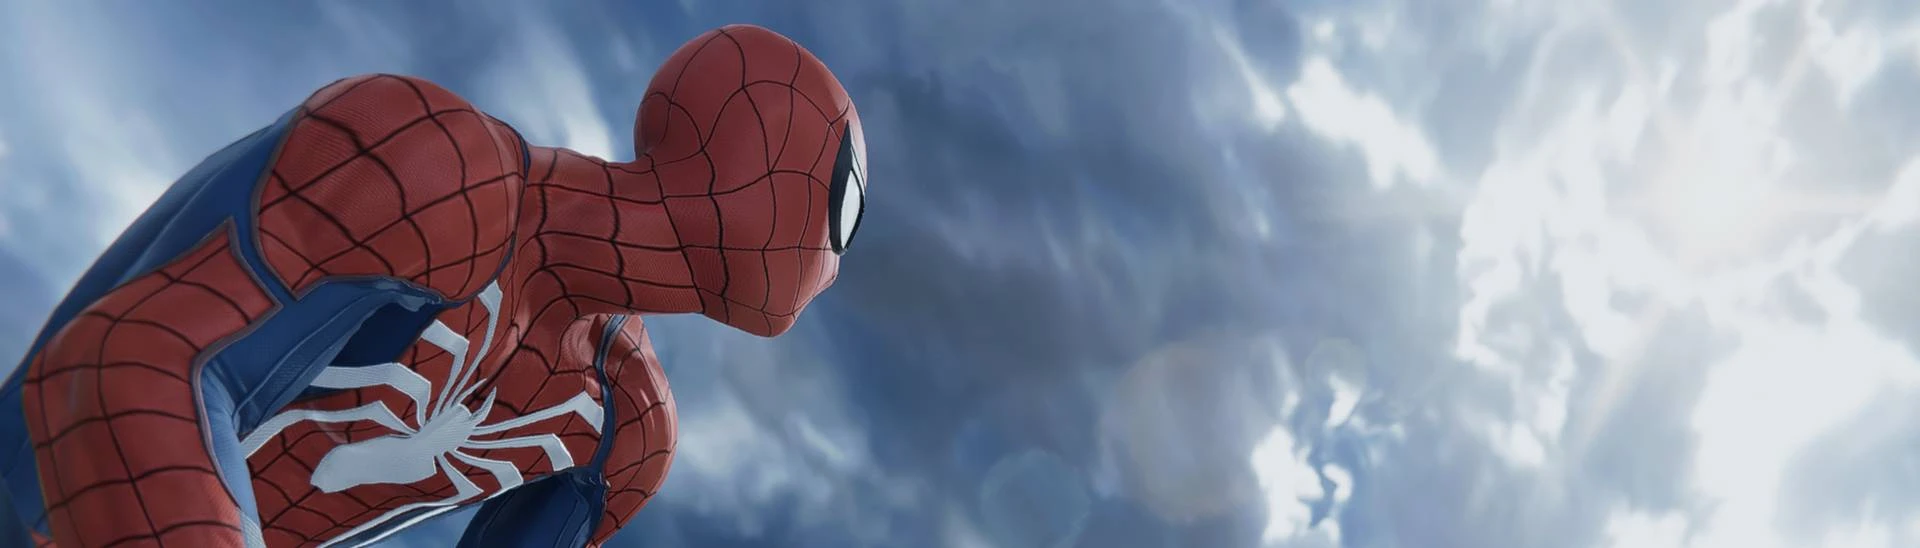 Marvel's Spider-Man Remastered - Lemon Sky Studios